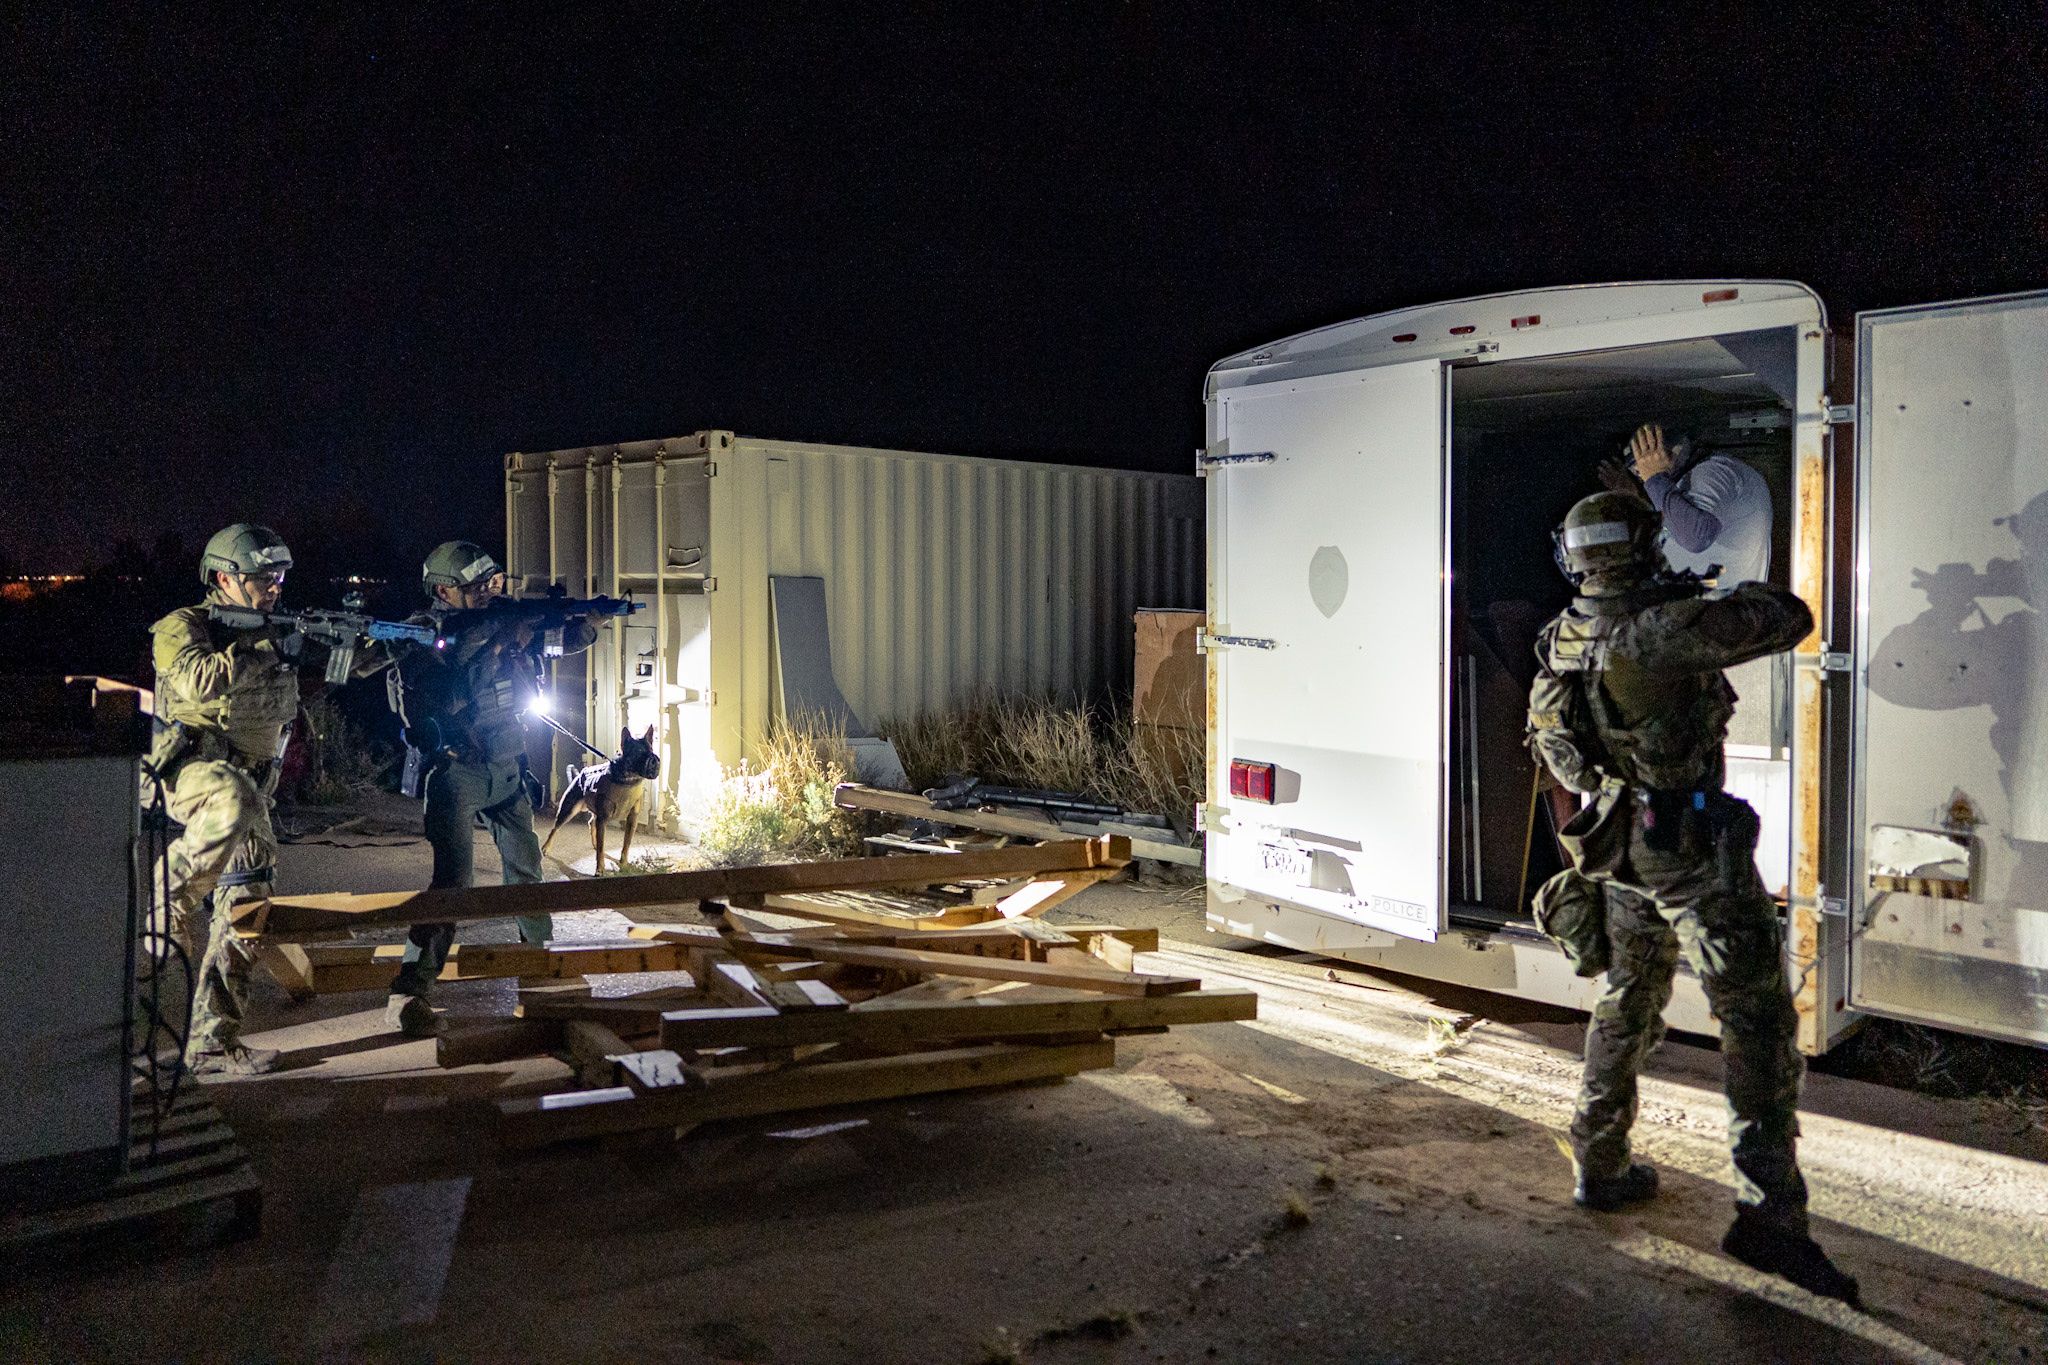 SWAT operators confront a suspect hiding in a trailer